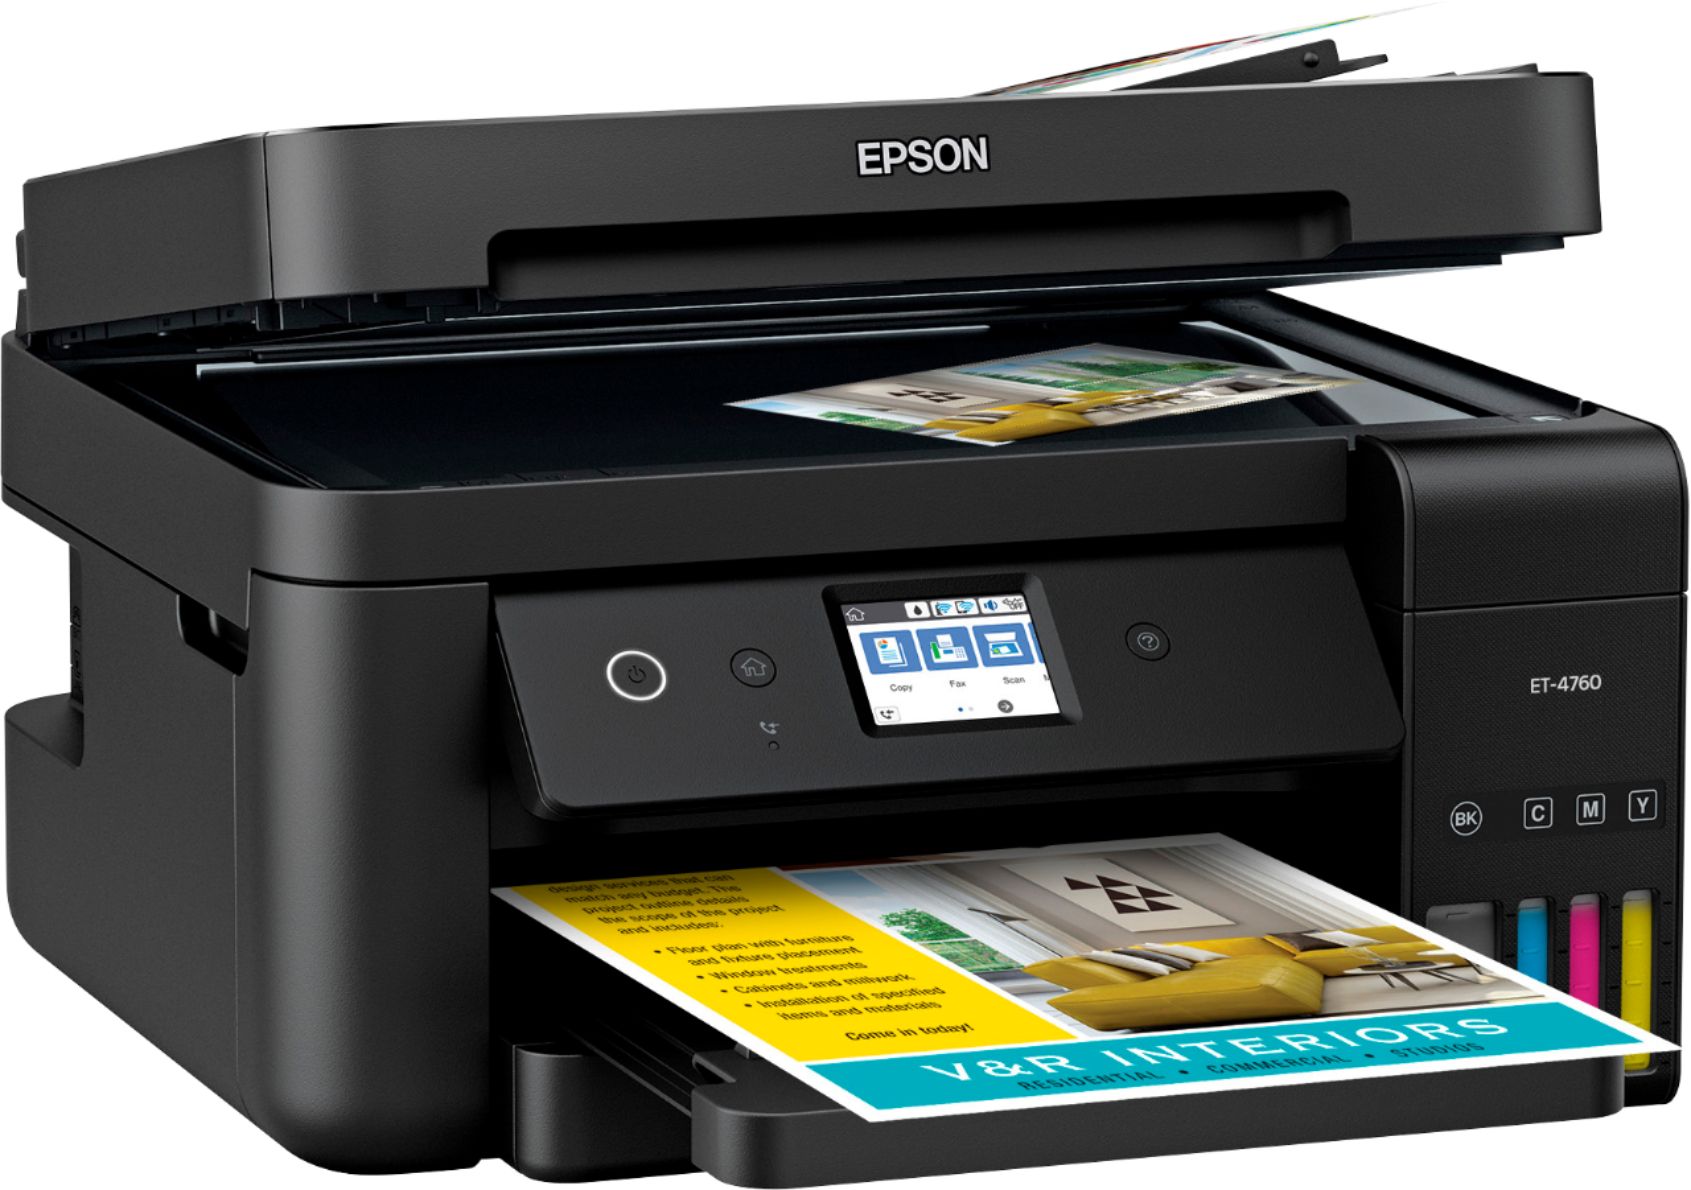  Epson  EcoTank ET 4760 Wireless All  In One  Printer Black 